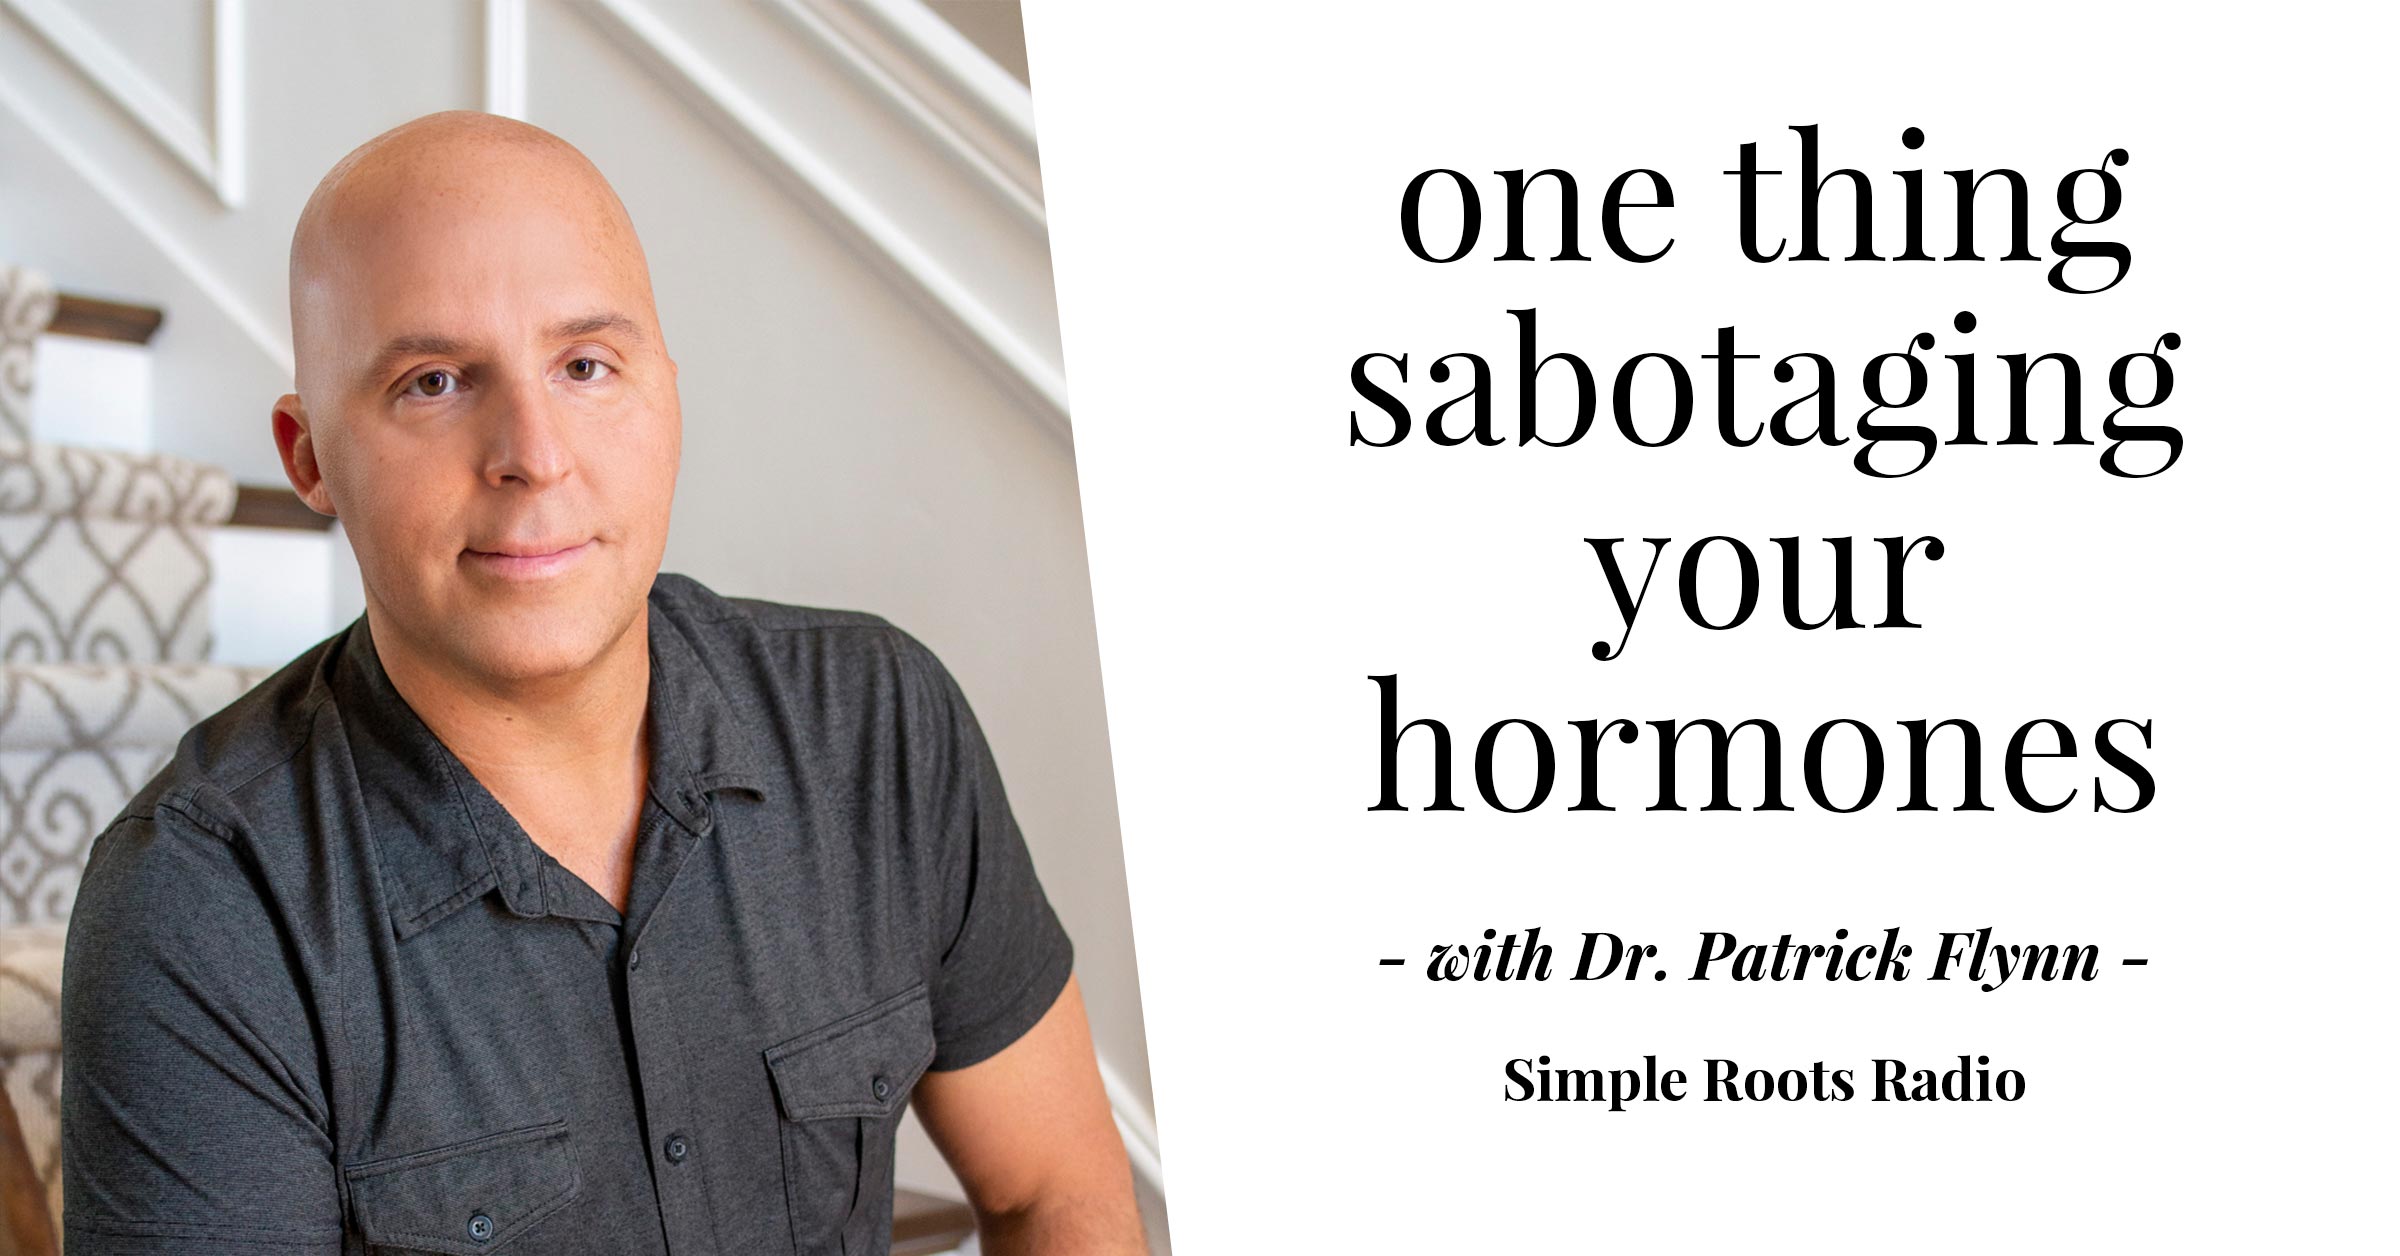 The one thing sabotaging your hormones | simplerootswellness.com #podcast #hormones #testosterone #estrogen #easy